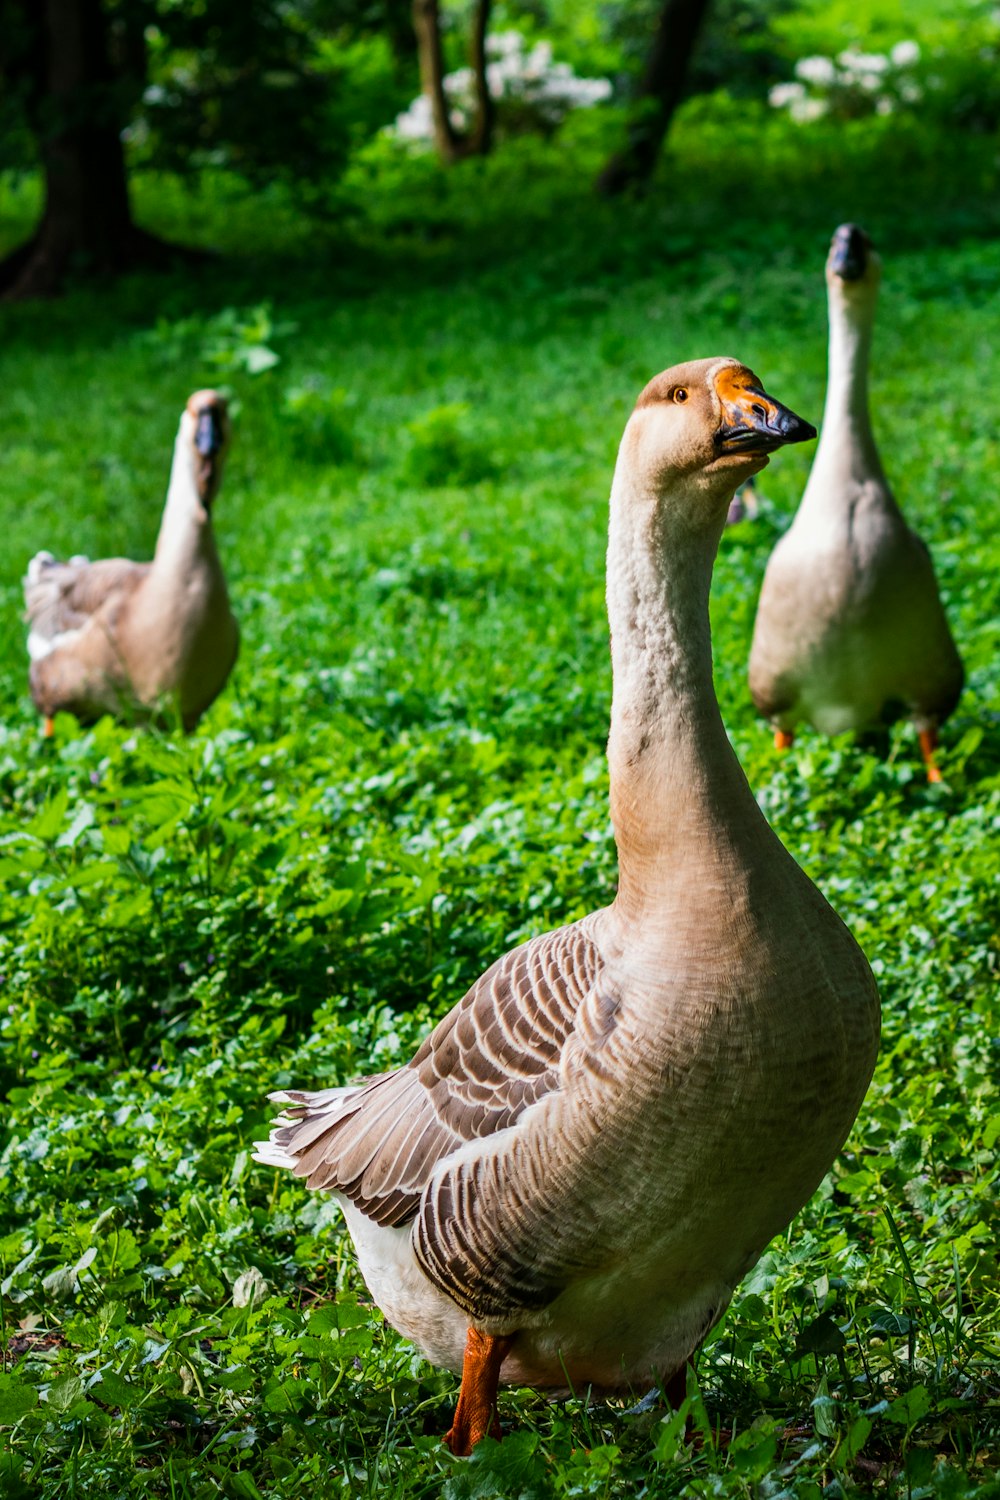 Braune Ente tagsüber auf grünem Gras